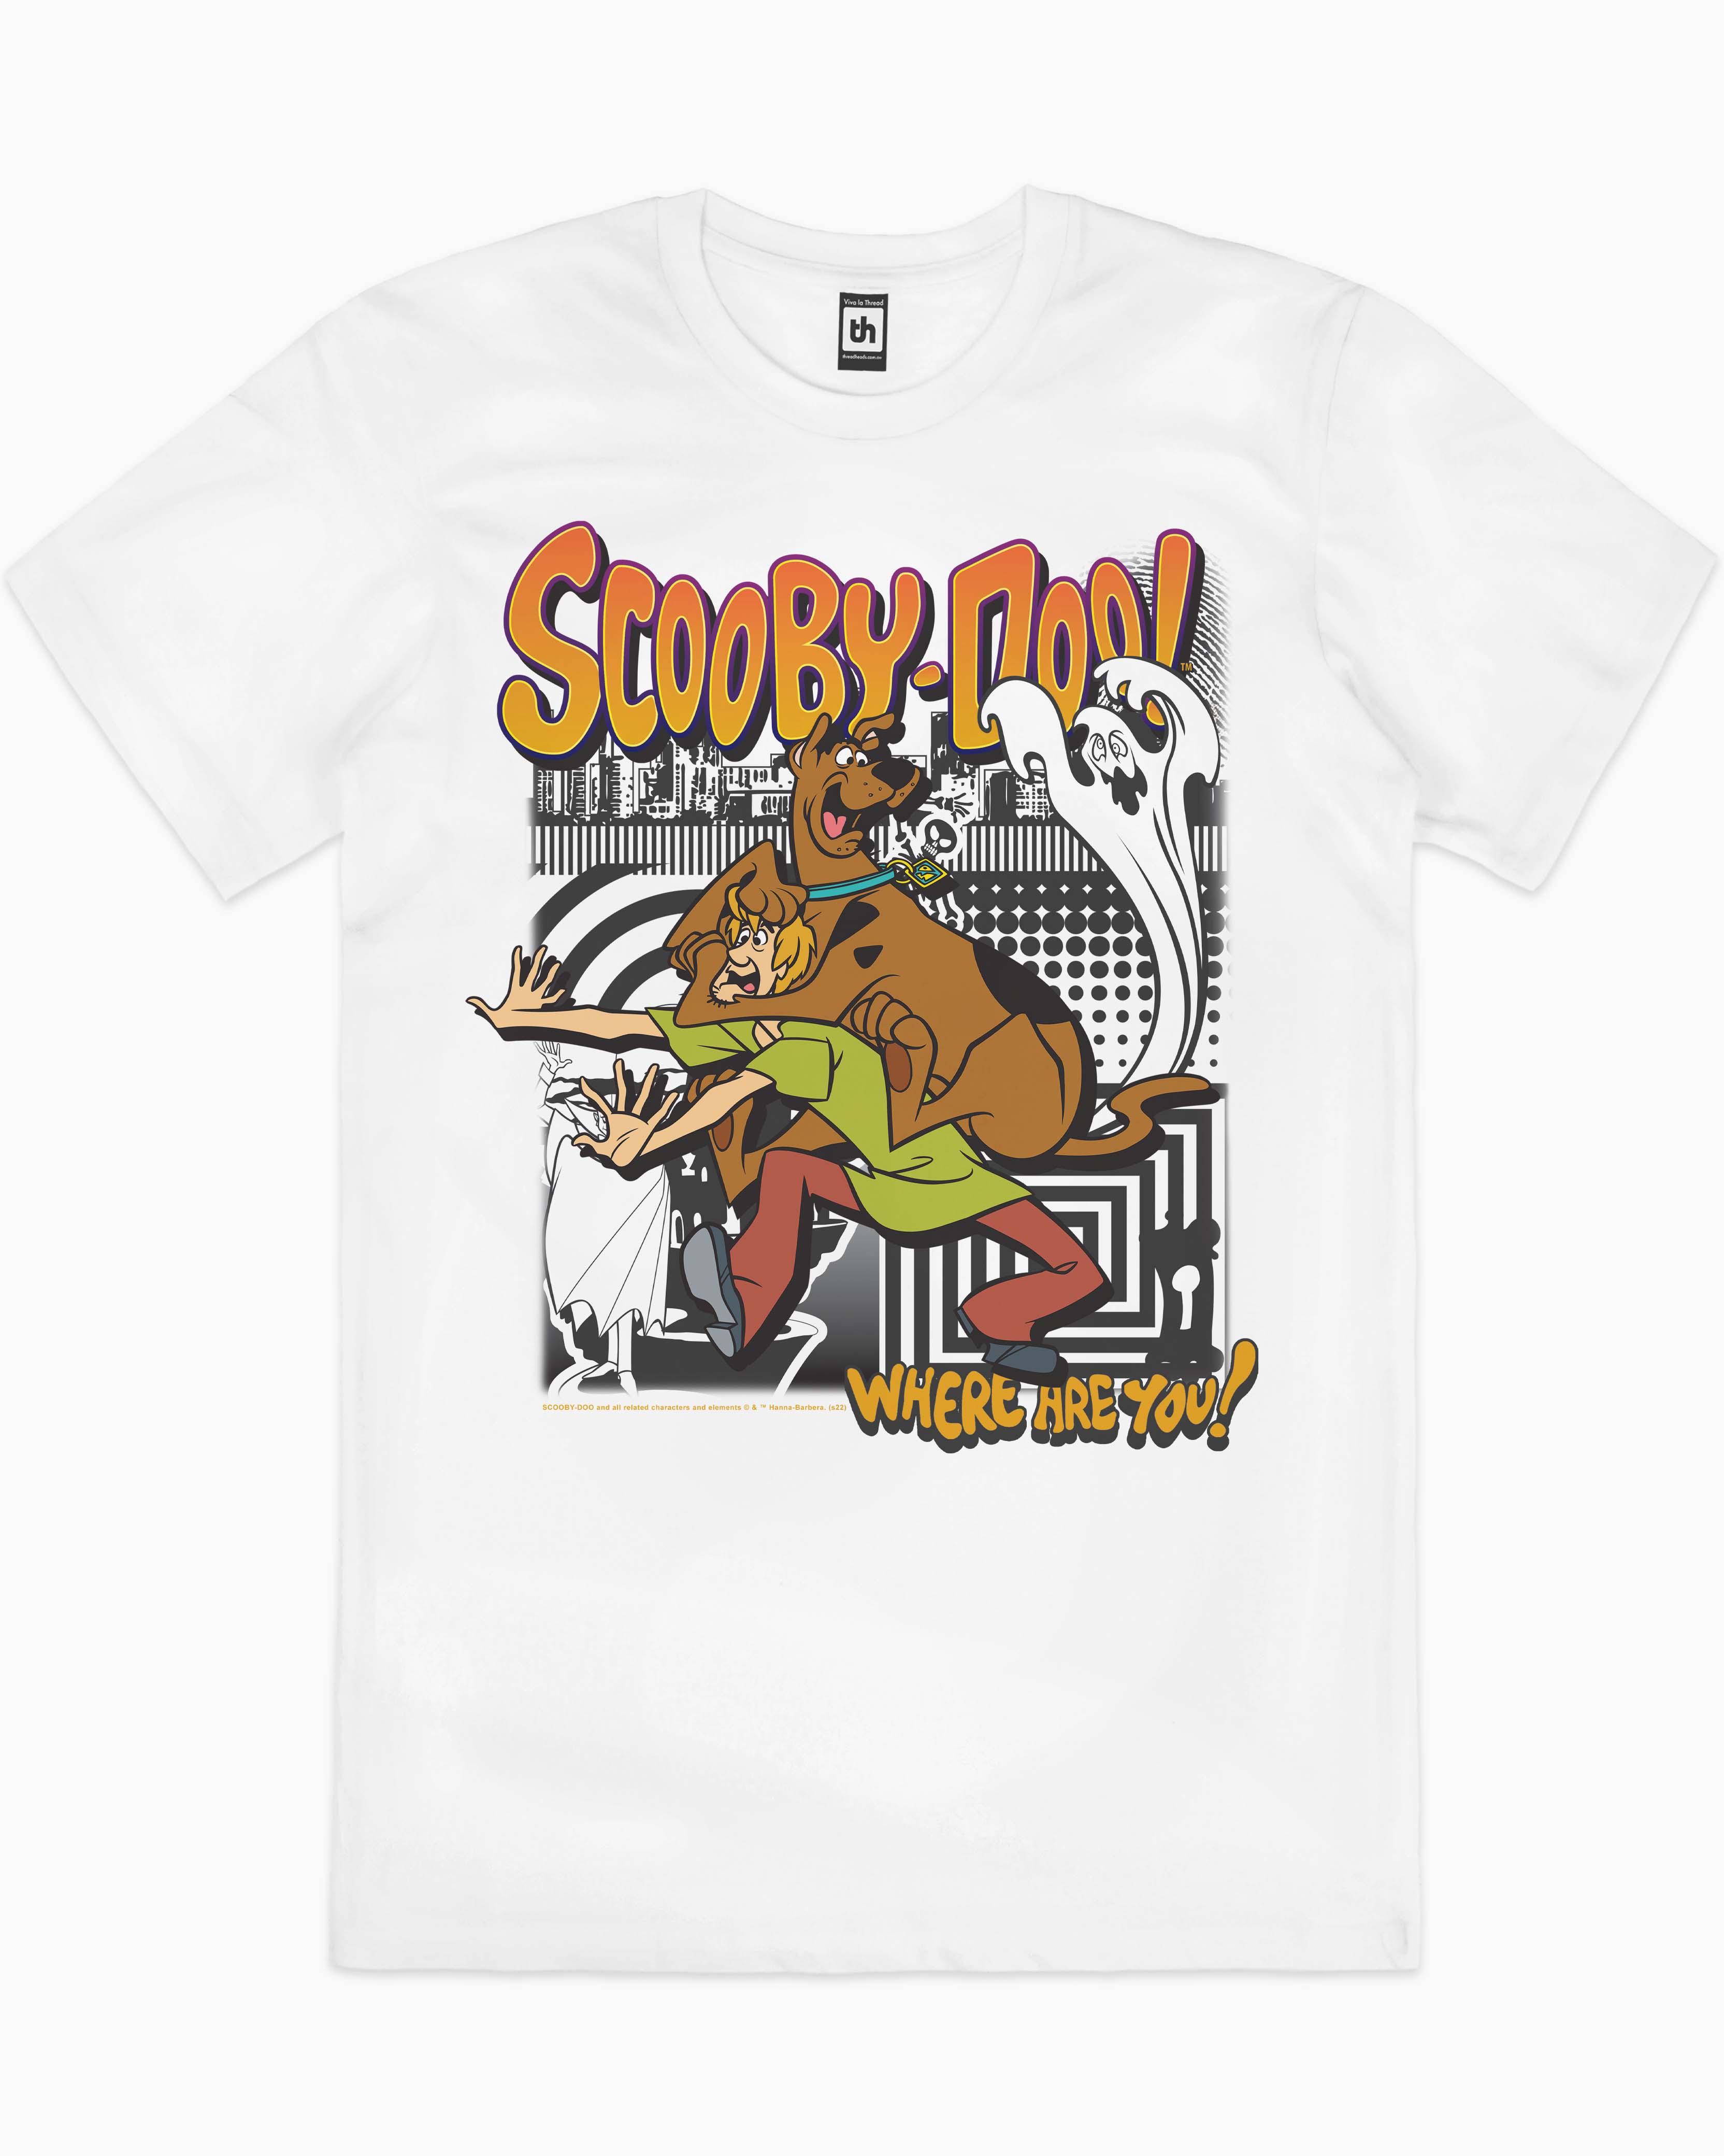 Scooby & Shaggy T-Shirt